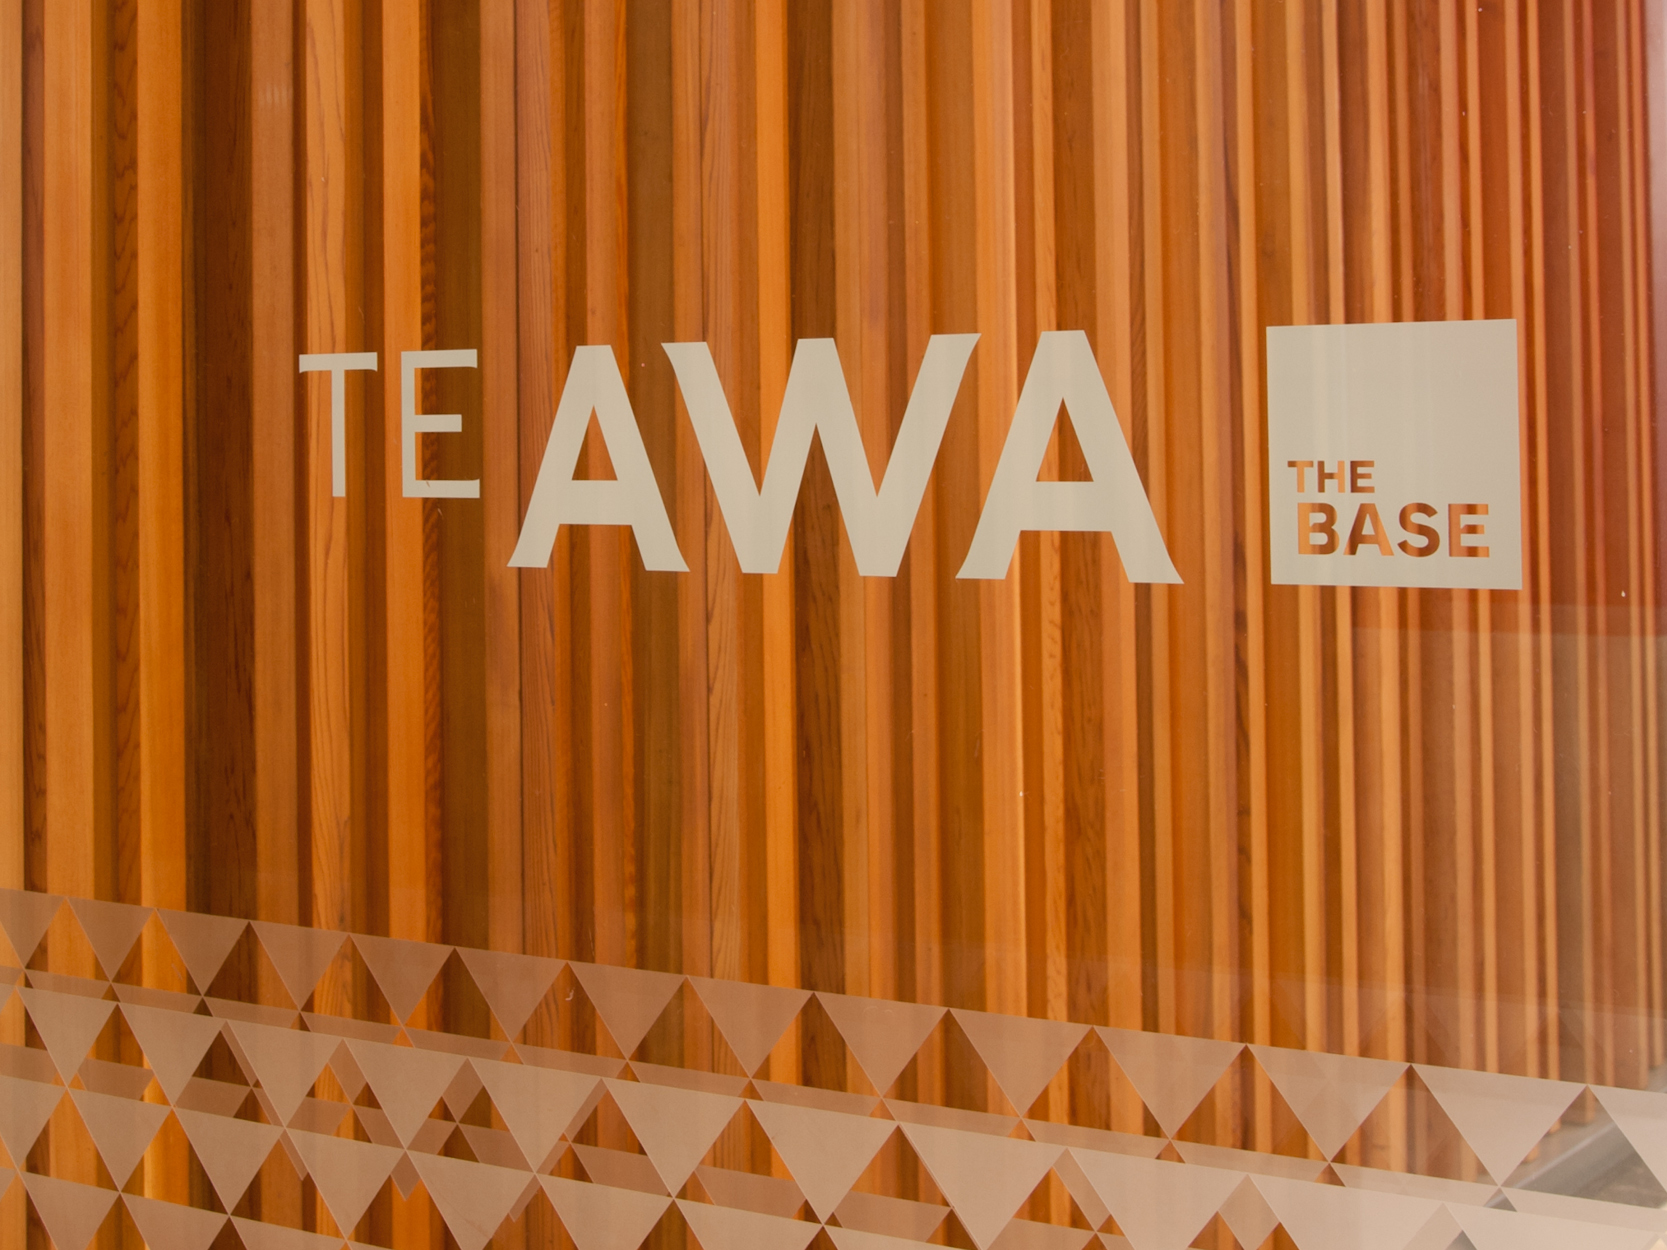 Te Awa and The Base logo on a window